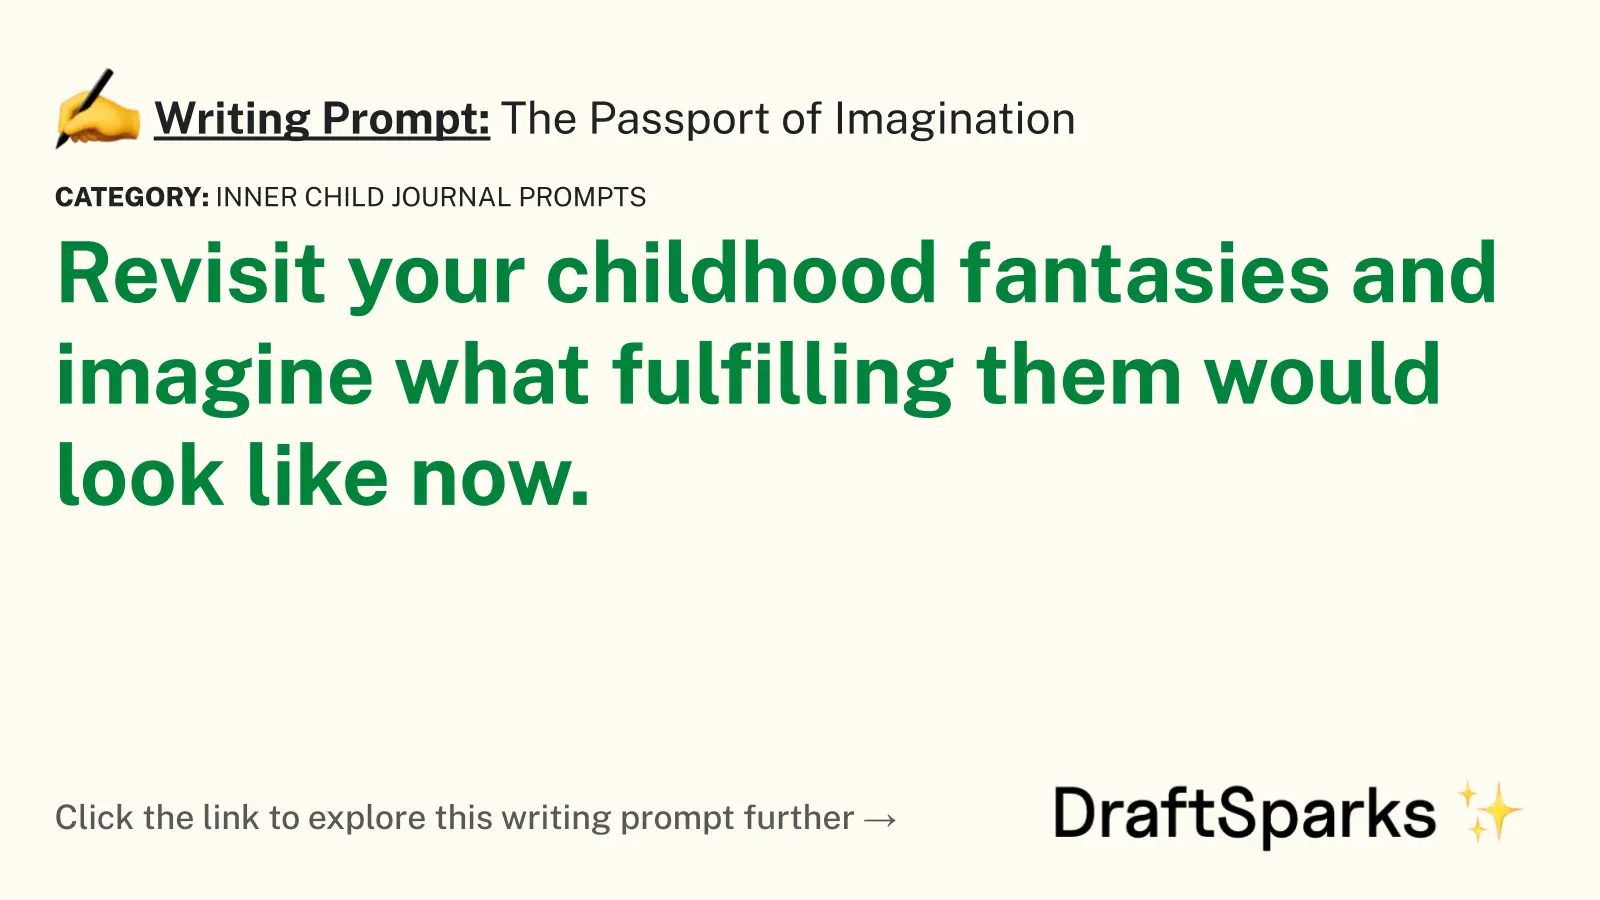 The Passport of Imagination